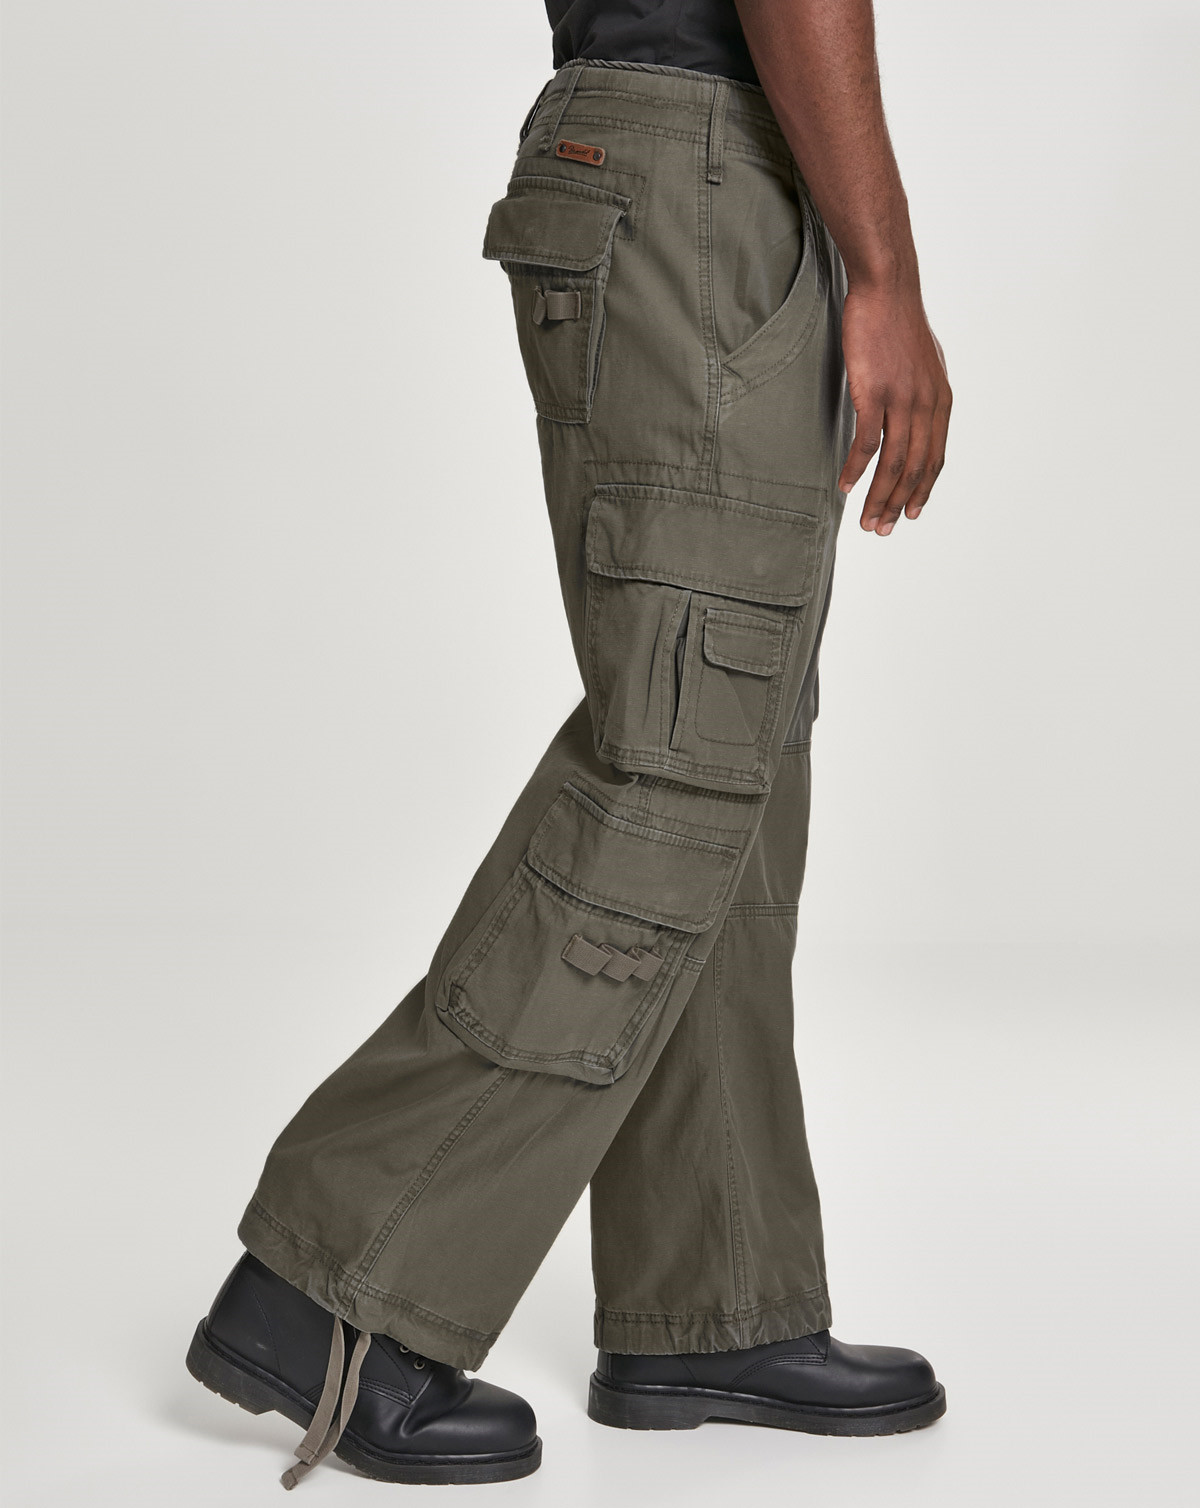 Buy Brandit Pure Vintage Cargo Pants | Money Back Guarantee | ARMY STAR